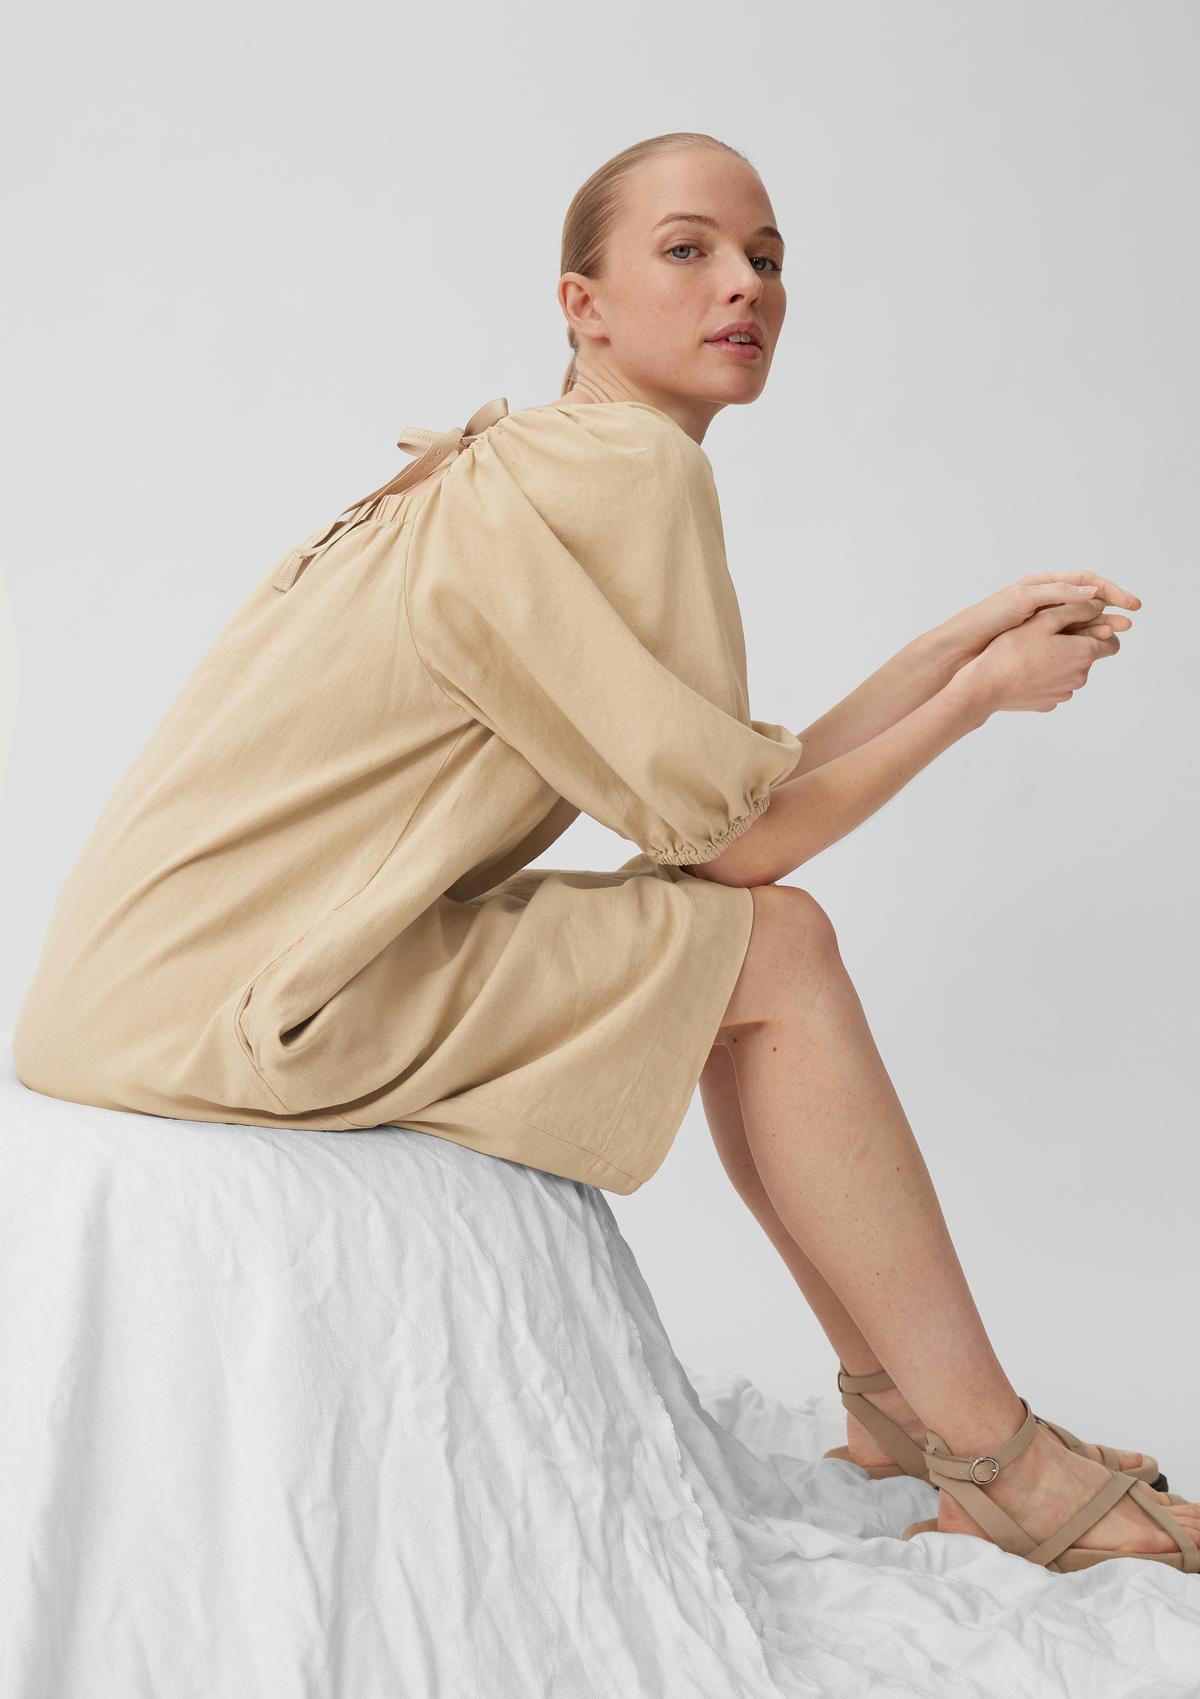 comma Midi dress in a linen blend